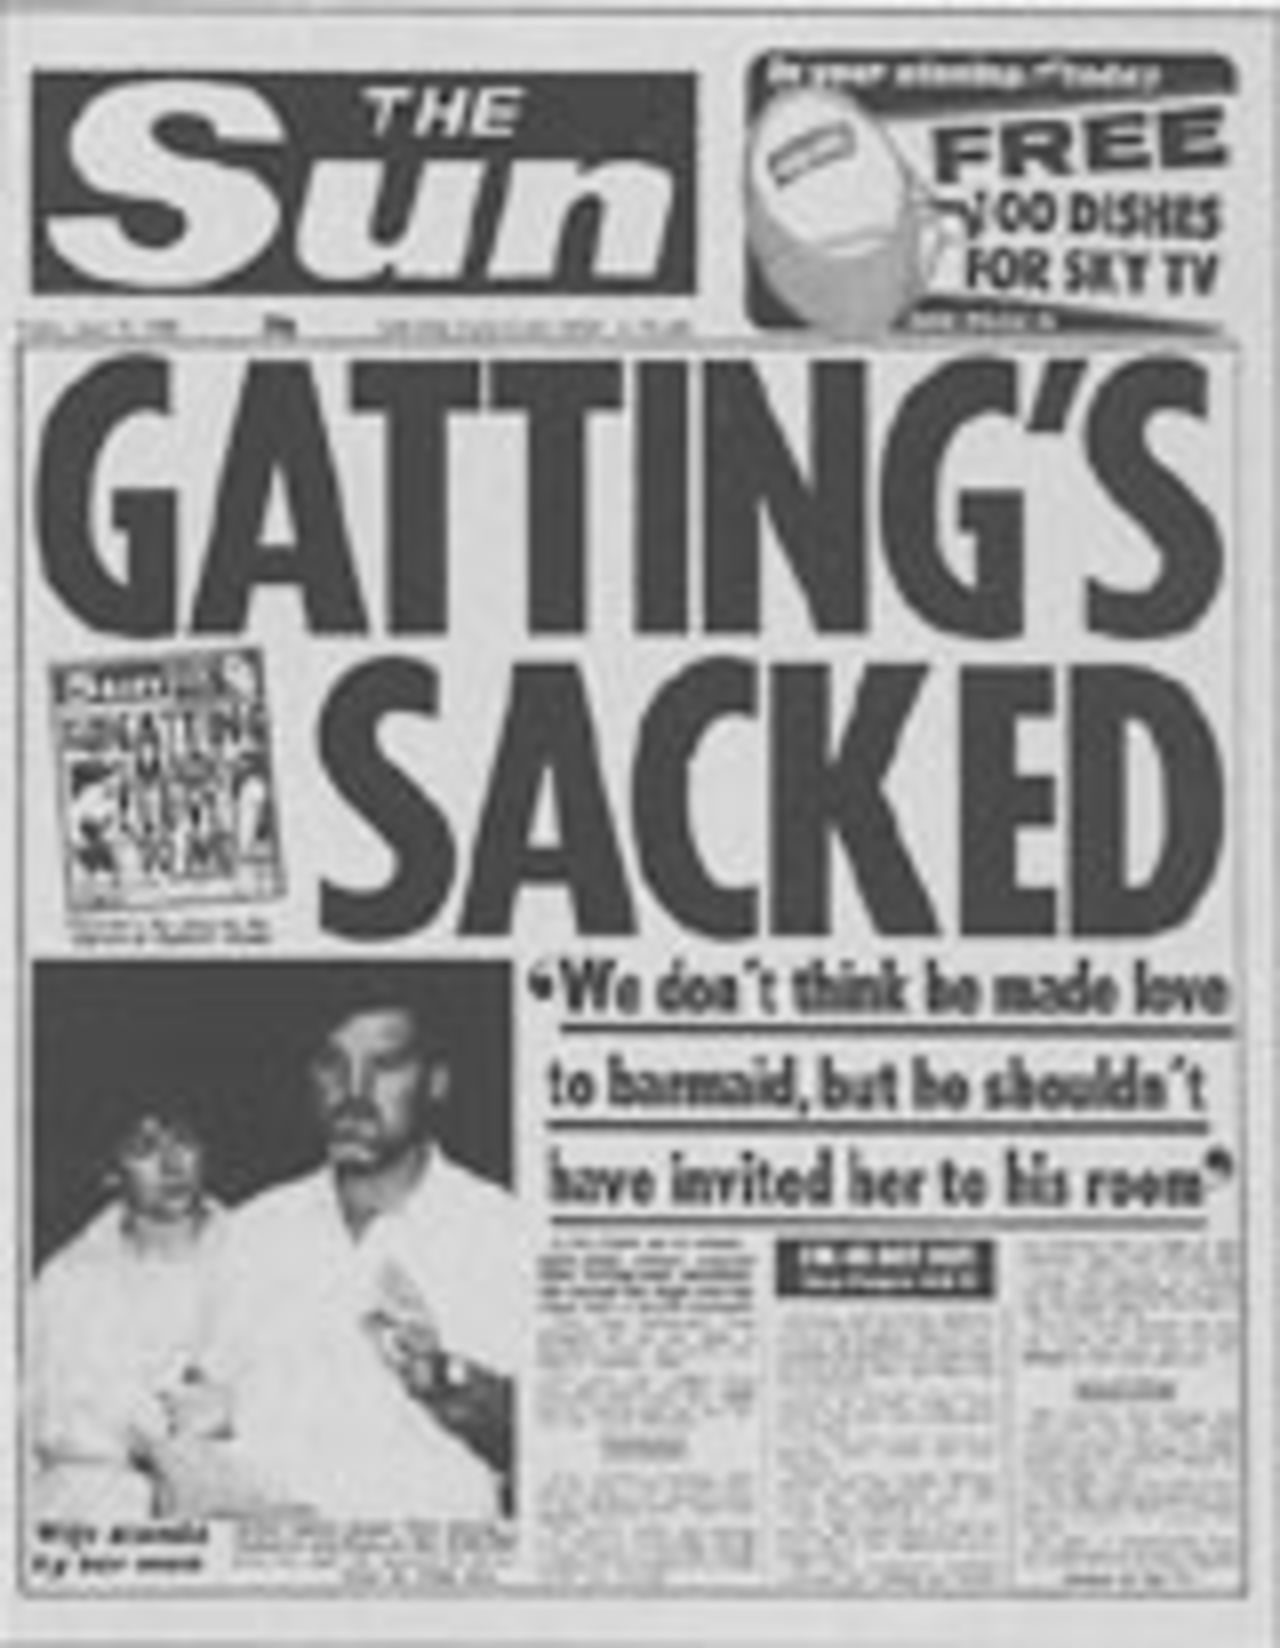 The Sun - Gatting's Sacked headline, June 1988